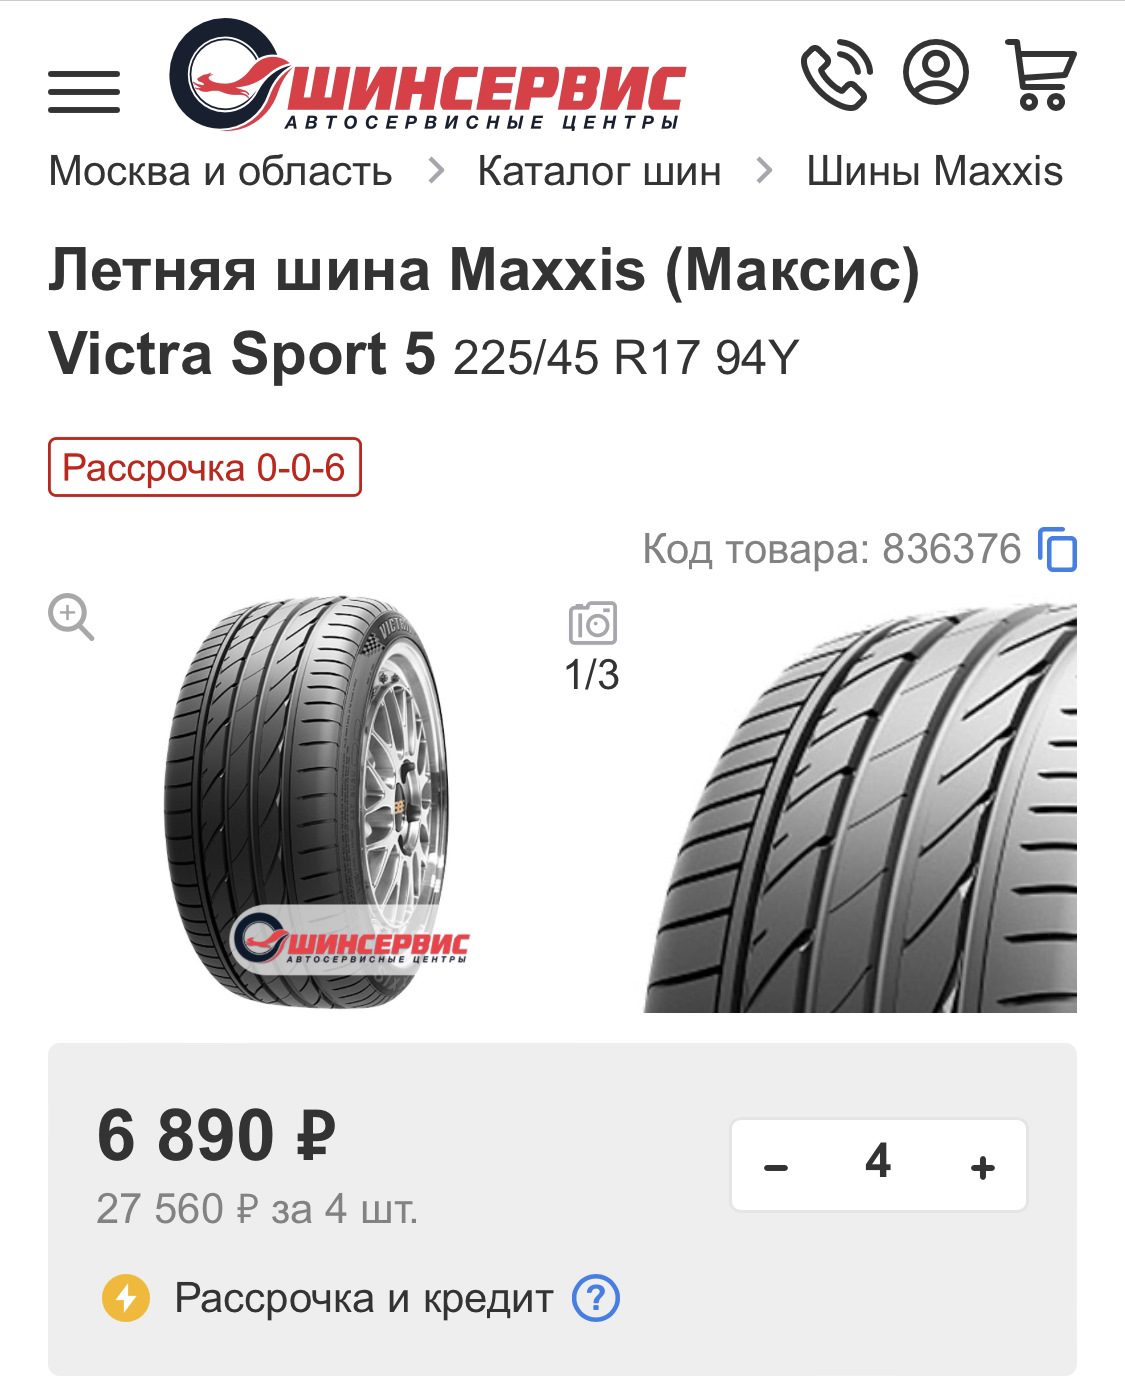 Maxxis Victra Sport 5. Maxxis Victra Sport 5 евроэтикетка. Maxxis Victra Sport 5 225/45 r17. Maxxis vs5 SUV Victra Sport 5.